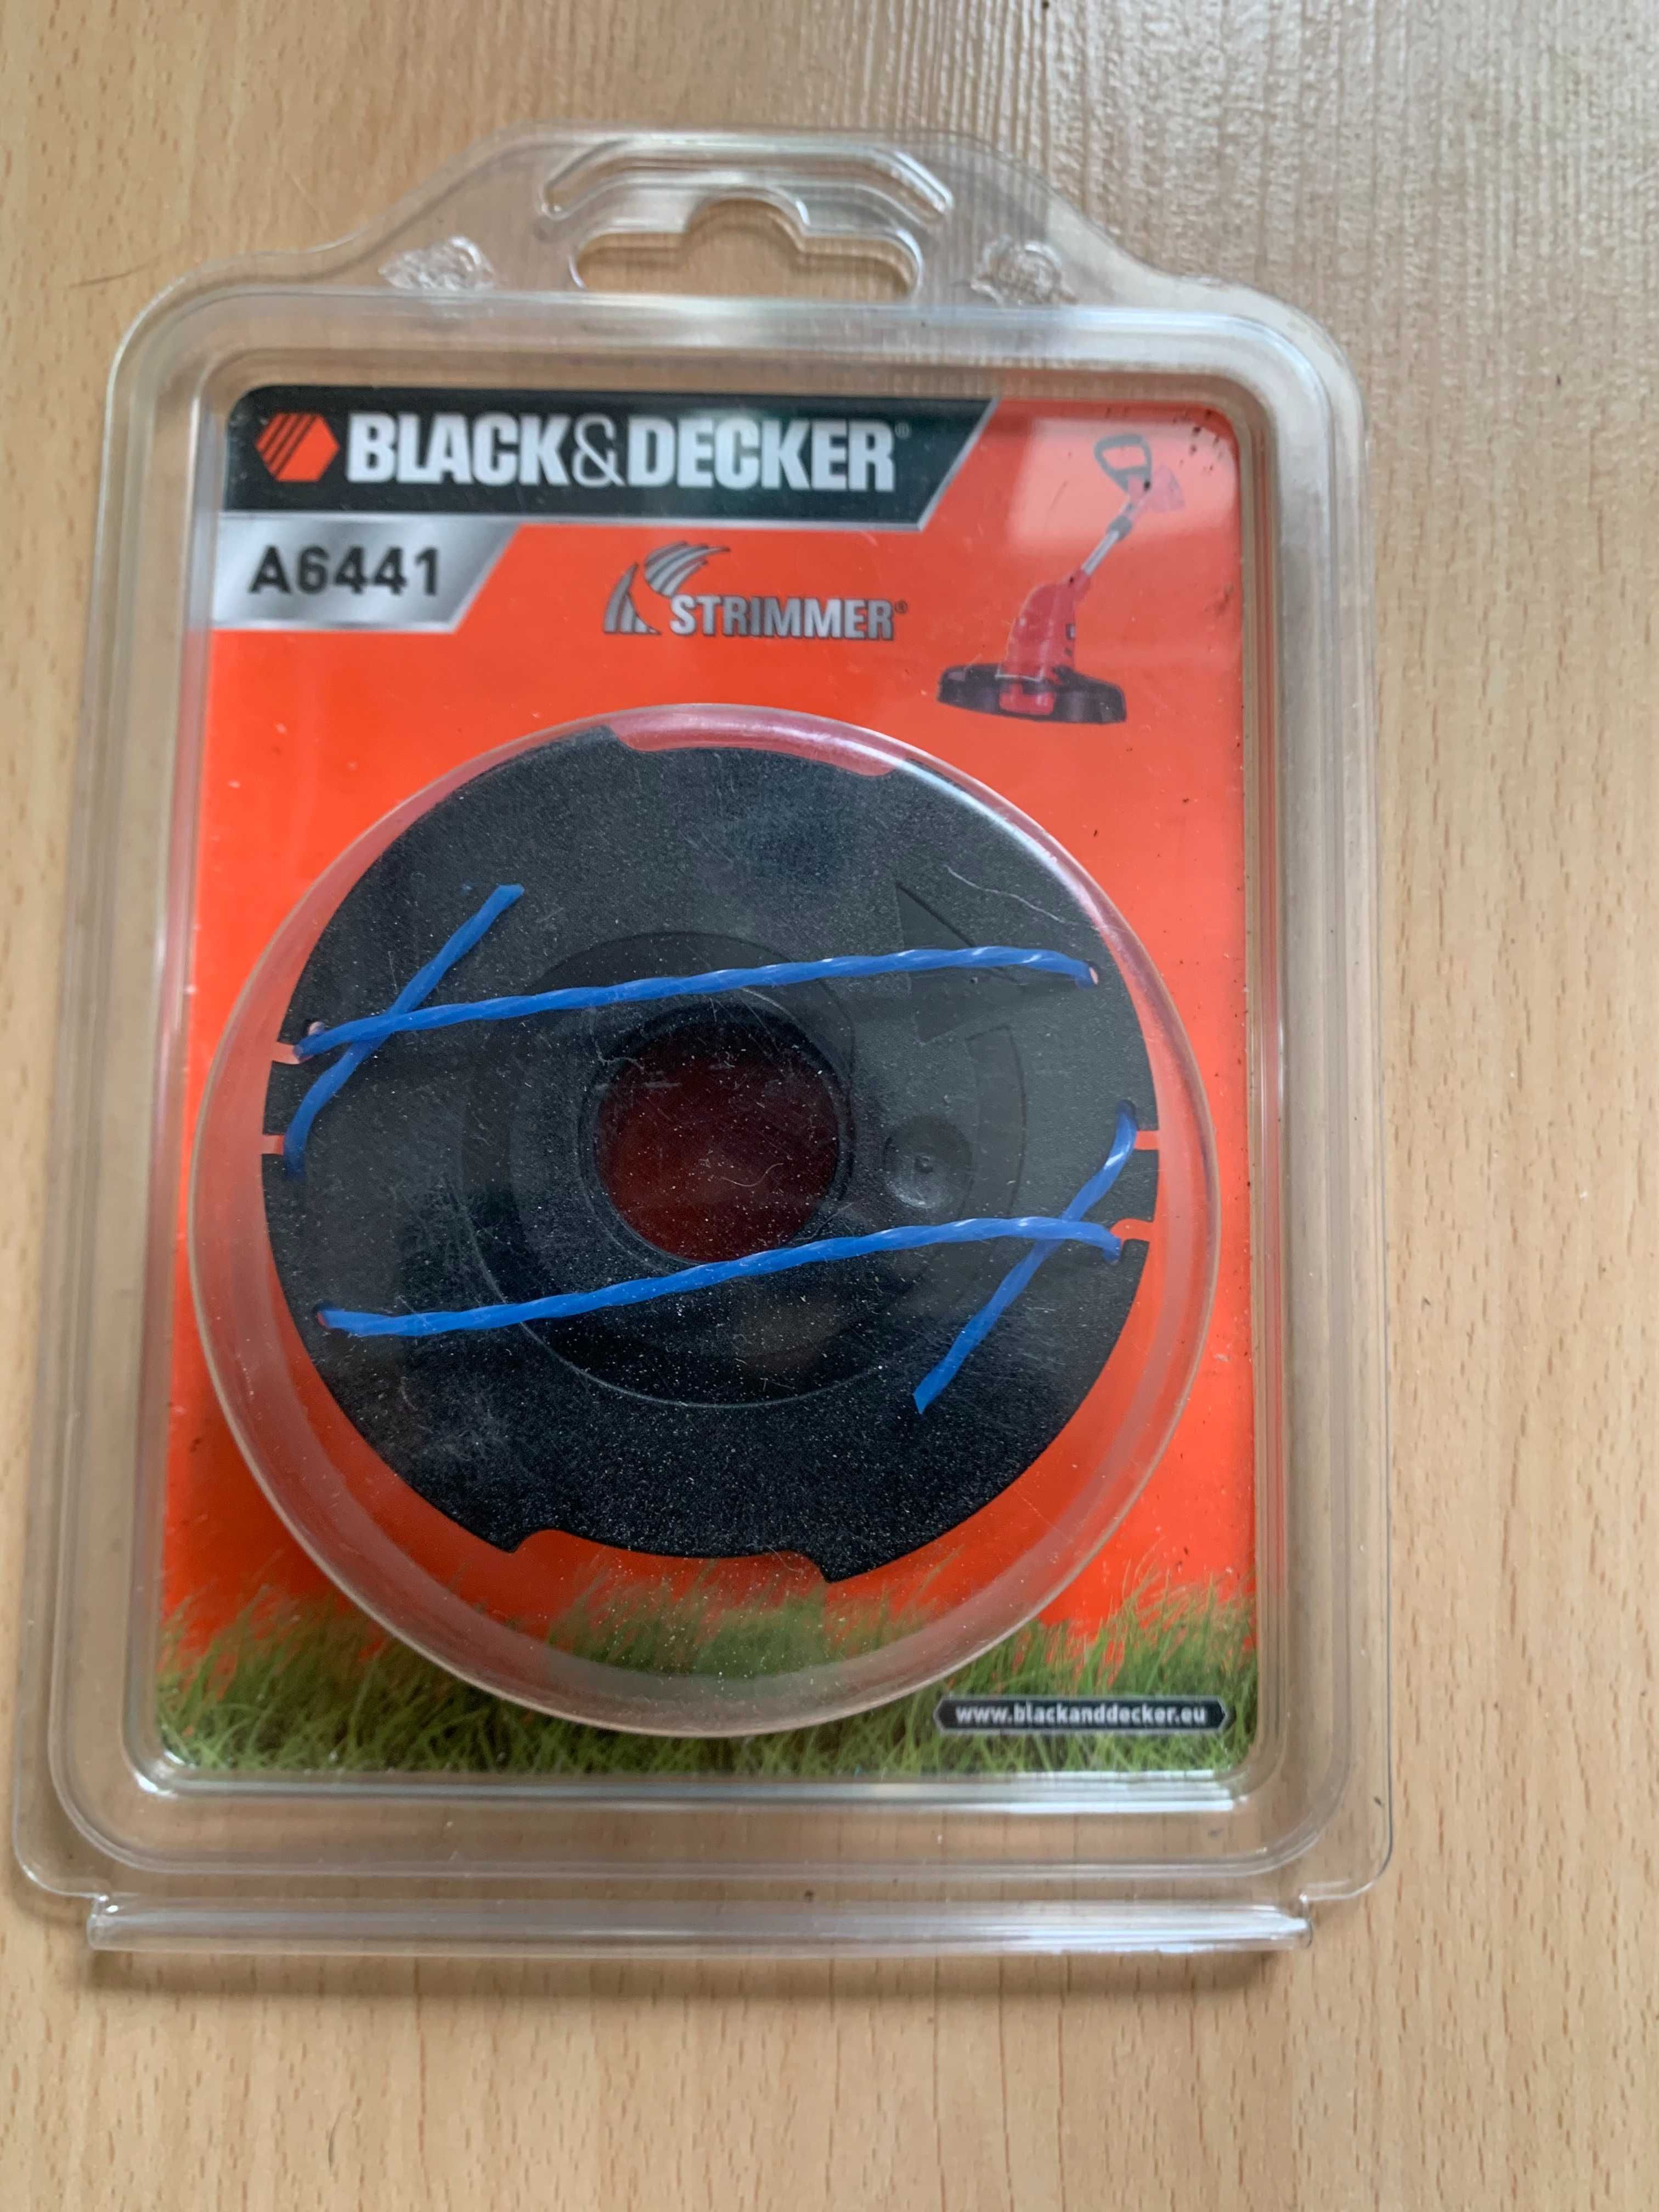 Carreto de fio de nylon BLACK + DECKER A6441XJ - Strimmer - Roçadora